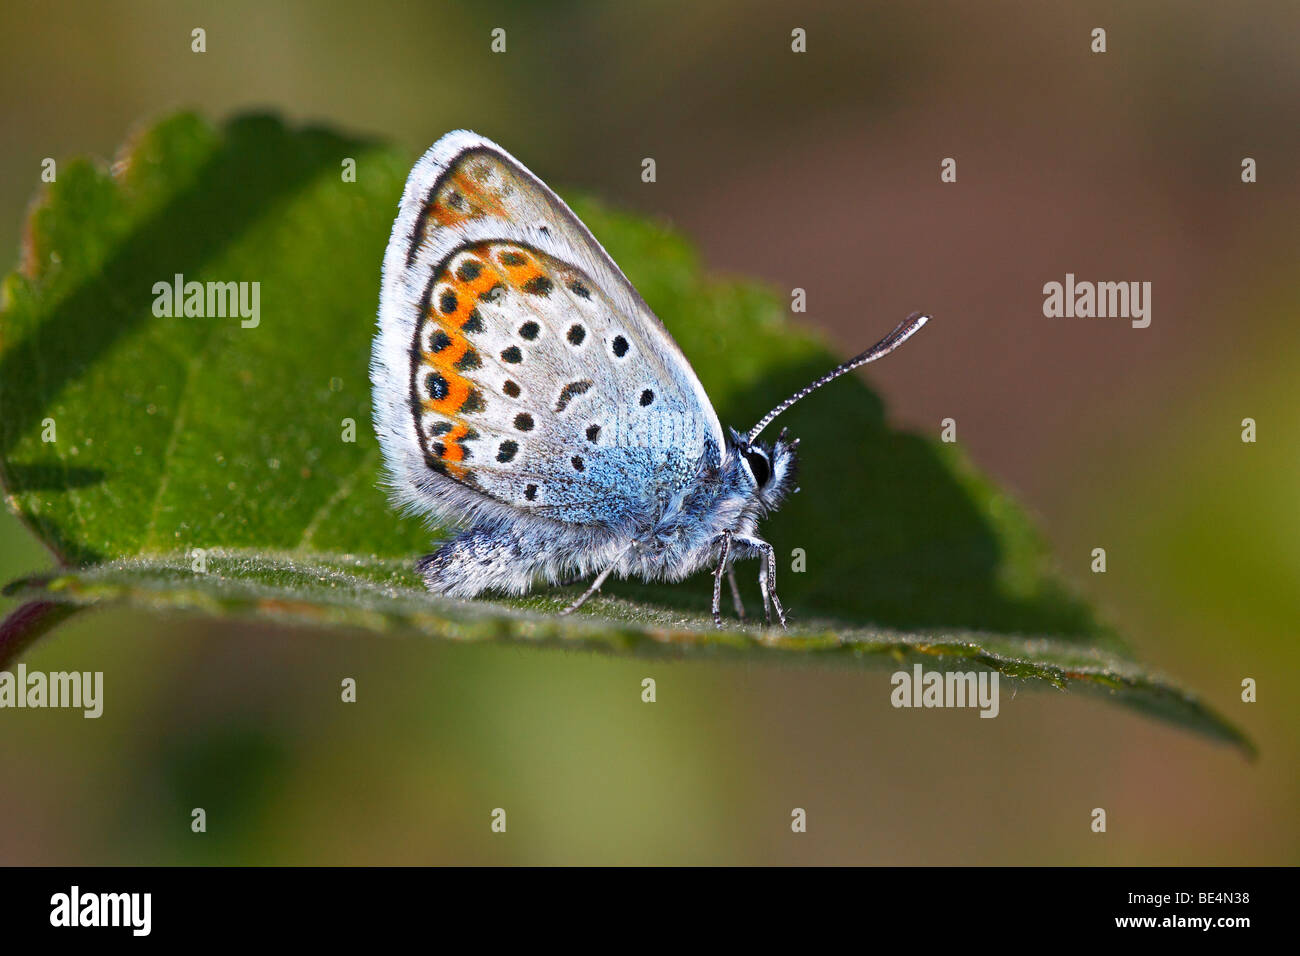 Male Silver-studded Blue (Plebejus argus) (Plebeius argus) butterfly Stock Photo